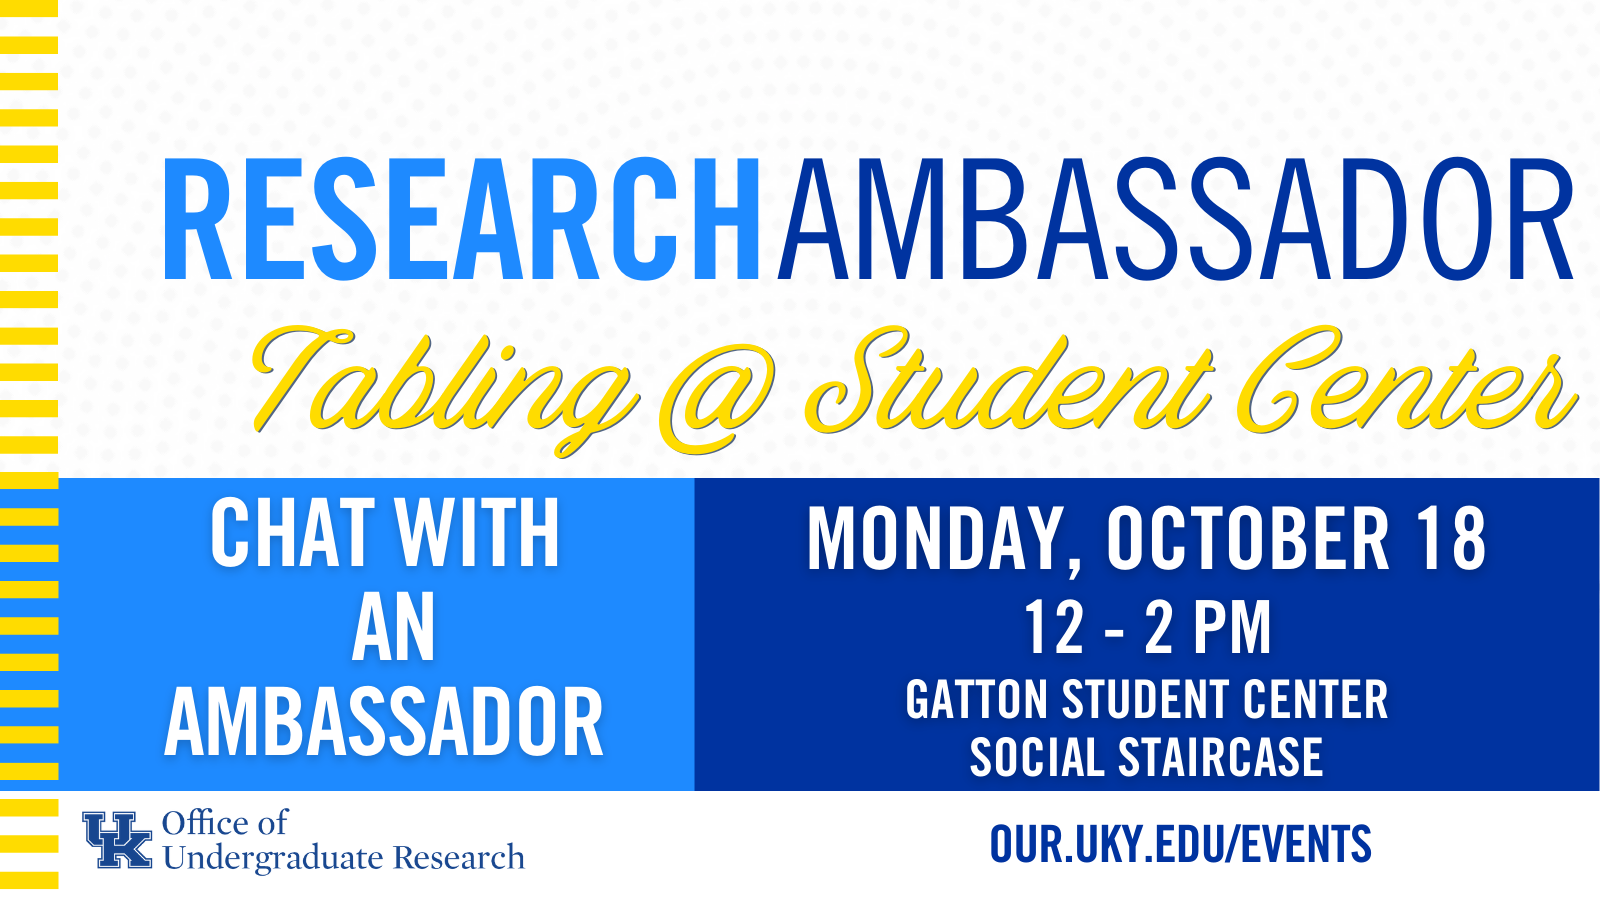 Undergraduate Research Ambassador tabling event October 21, 2021